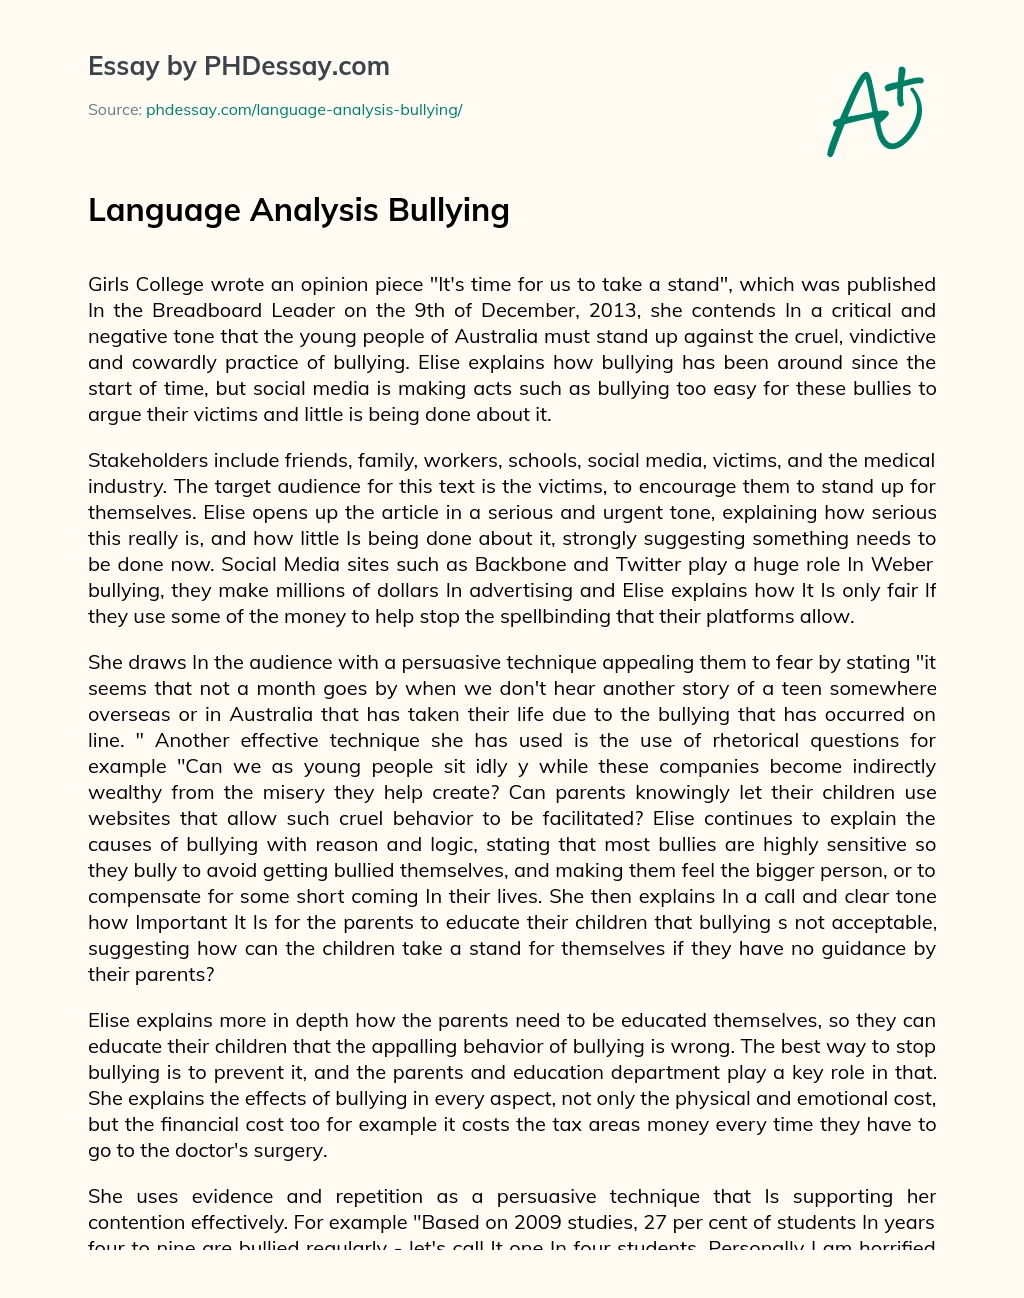 Language Analysis Bullying essay